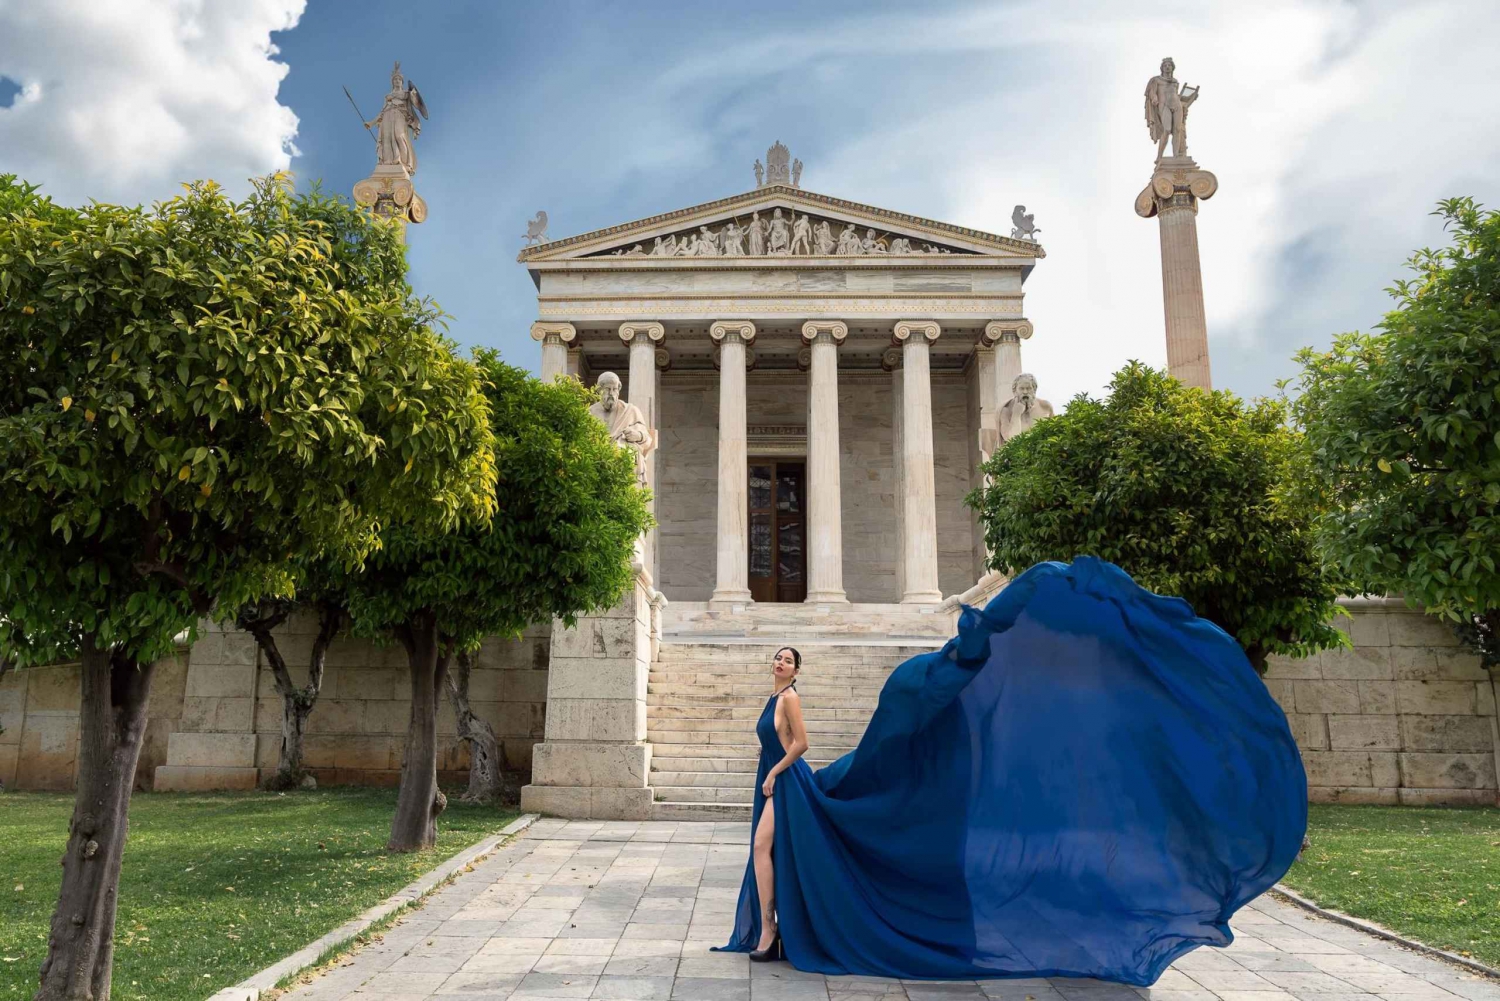 Ateena: Paketti: Flying Dress Photoshoot 'Express package'